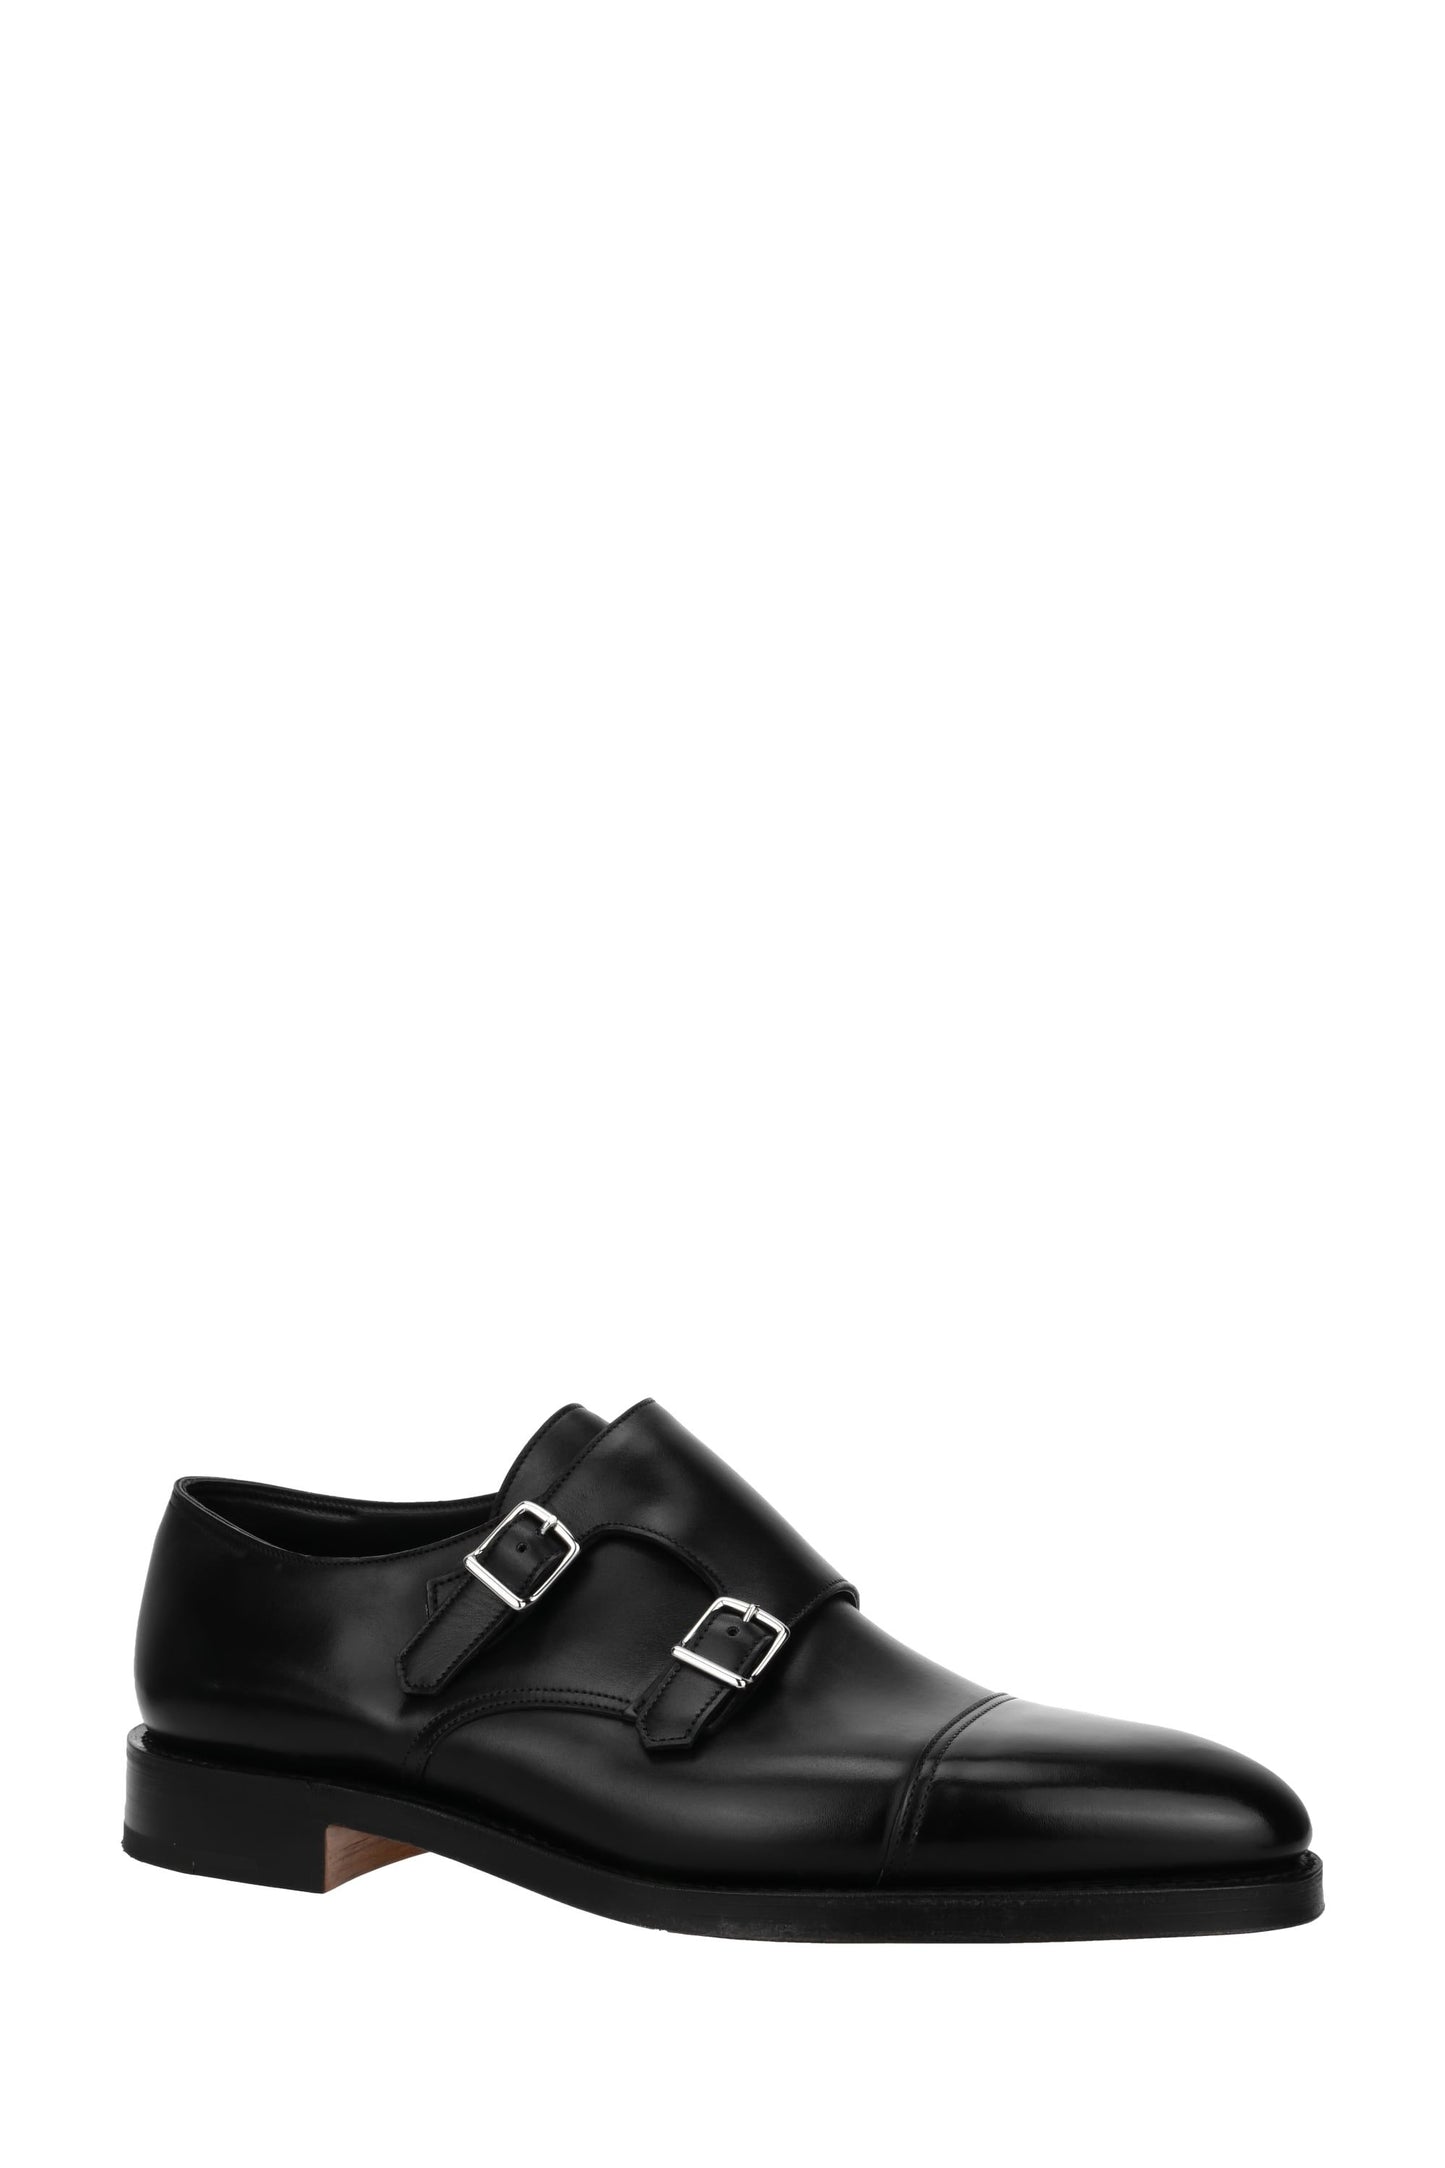 Monk William shoes